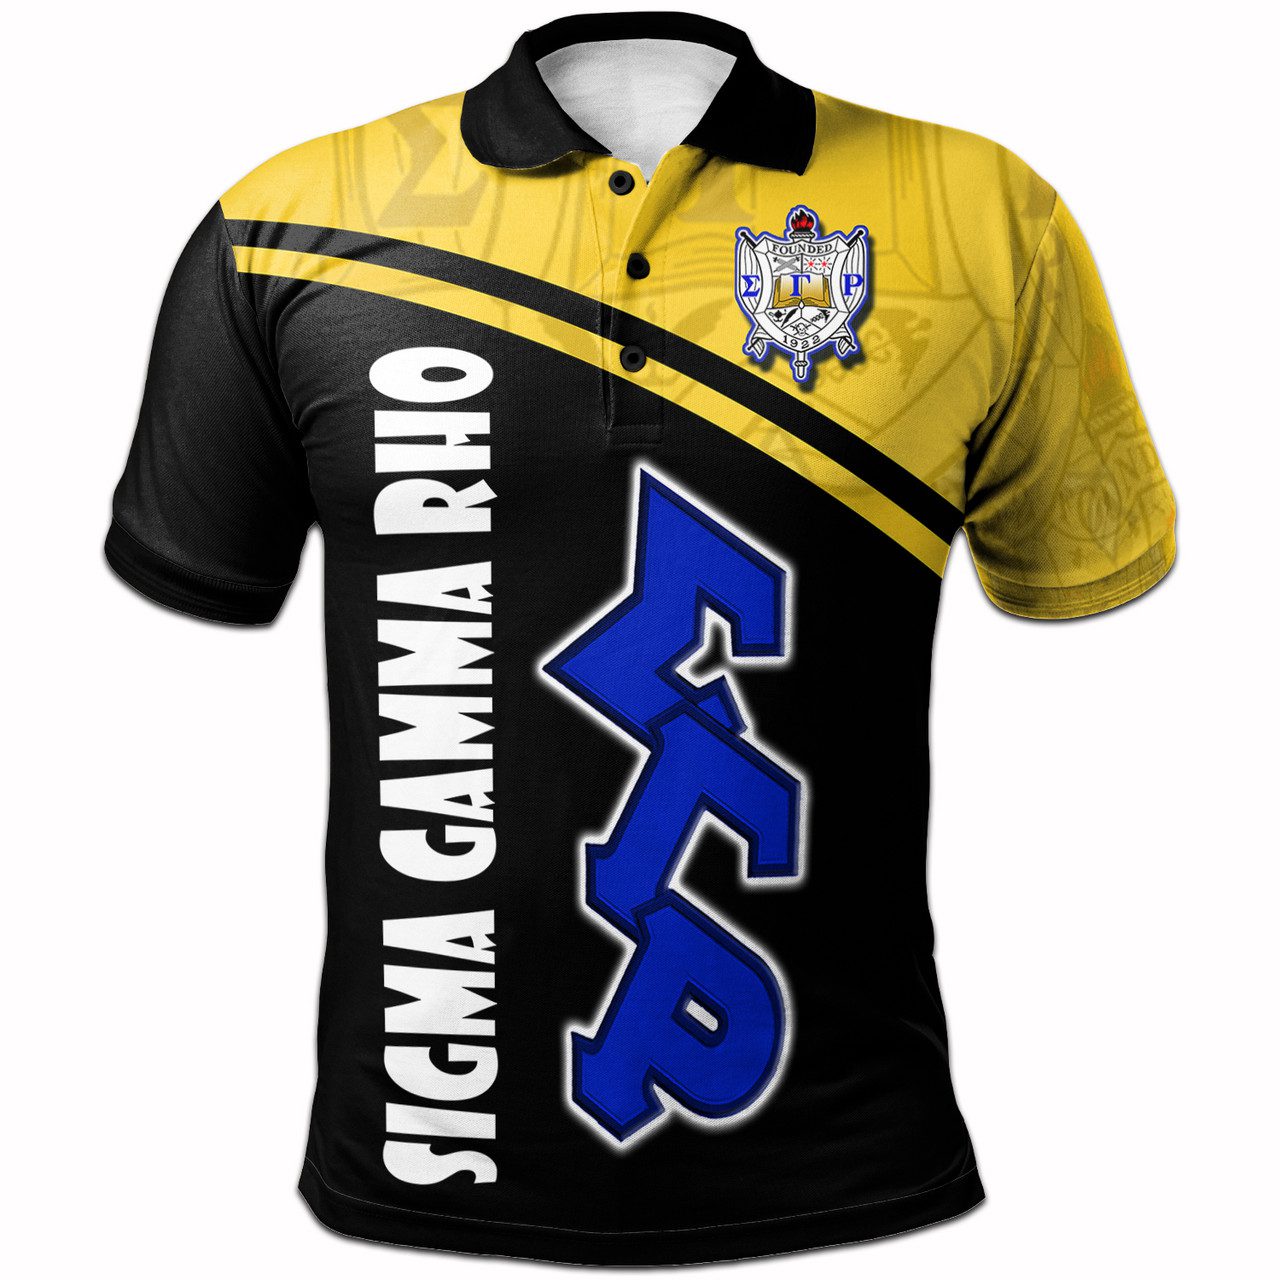 Sigma Gamma Rho Polo Shirt – Sorority Curve Version Polo Shirt